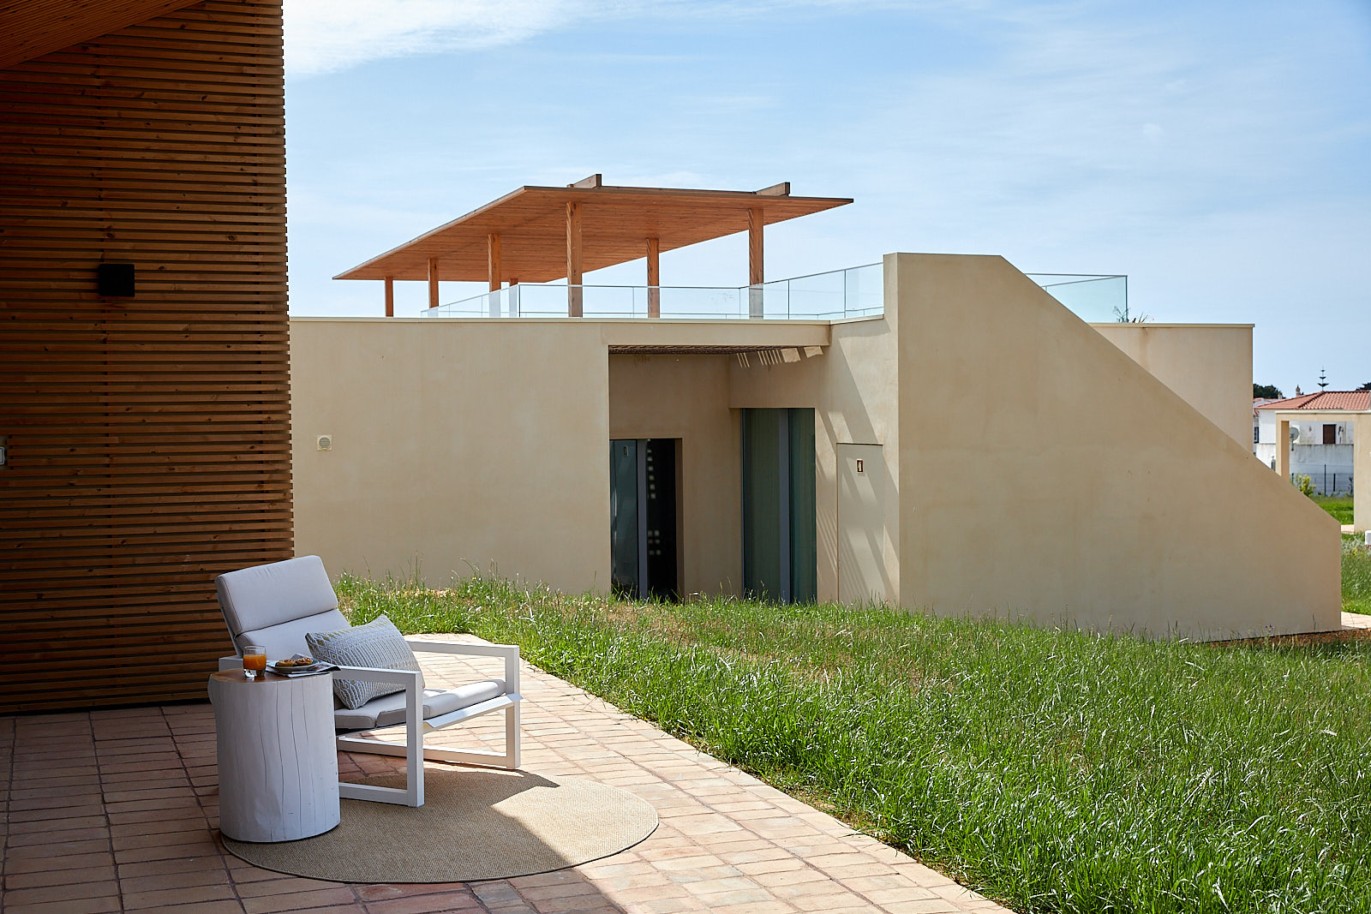 2 bedroom apartment in resort, for sale in Porches, Algarve_229236